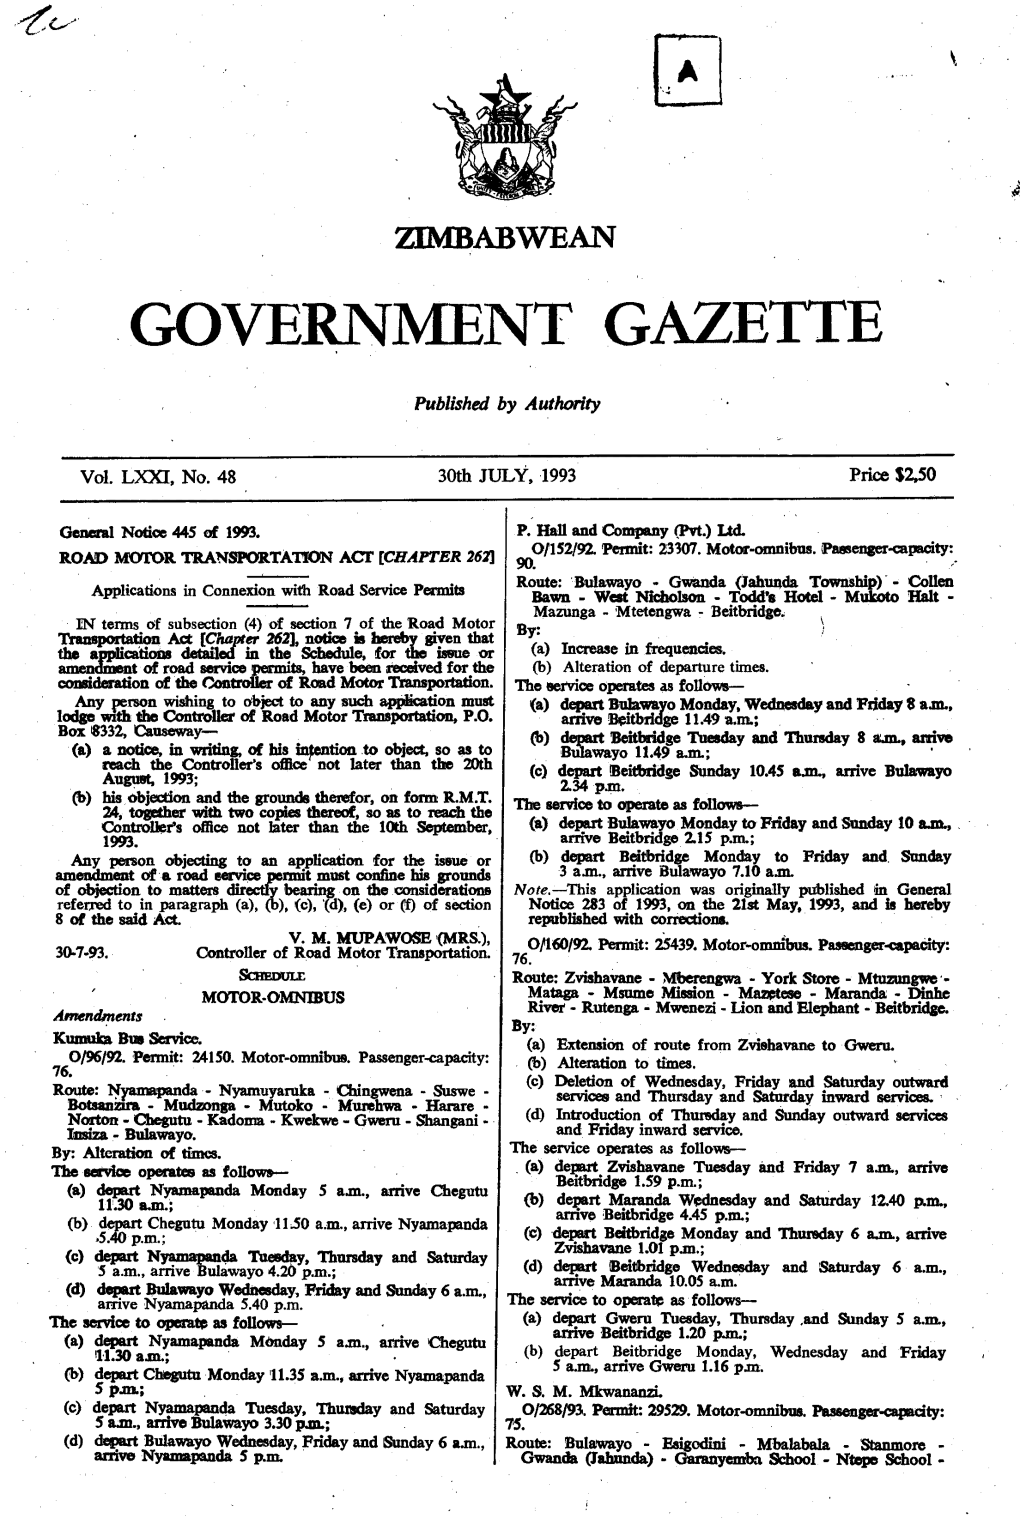 Goveenment Gazette